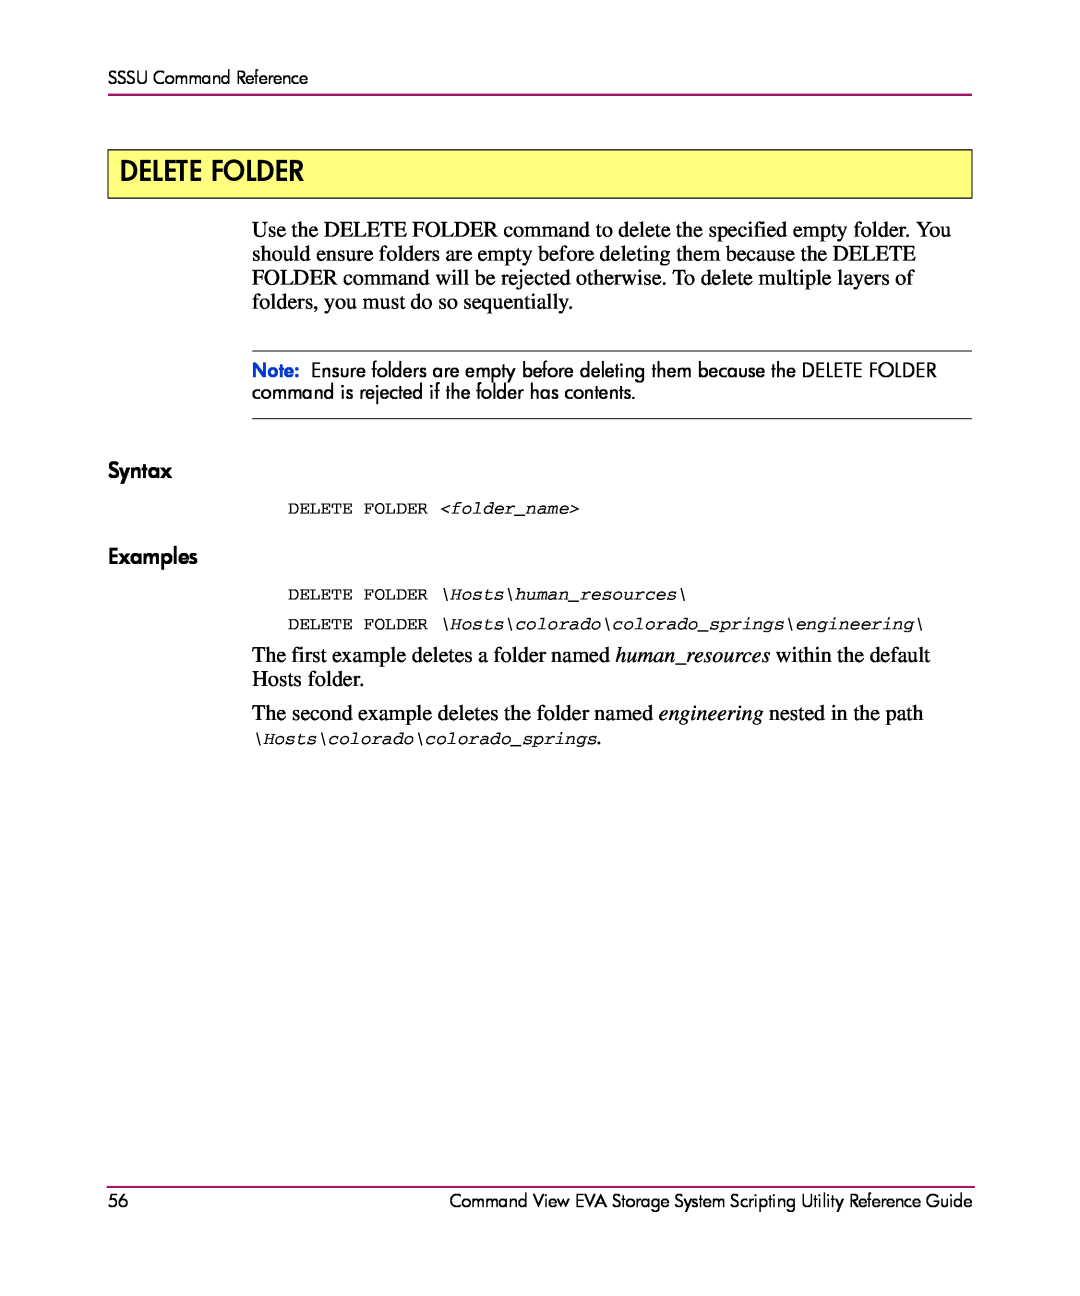 XM Satellite Radio AA-RU5HC-TE manual Delete Folder, DELETE FOLDER foldername 